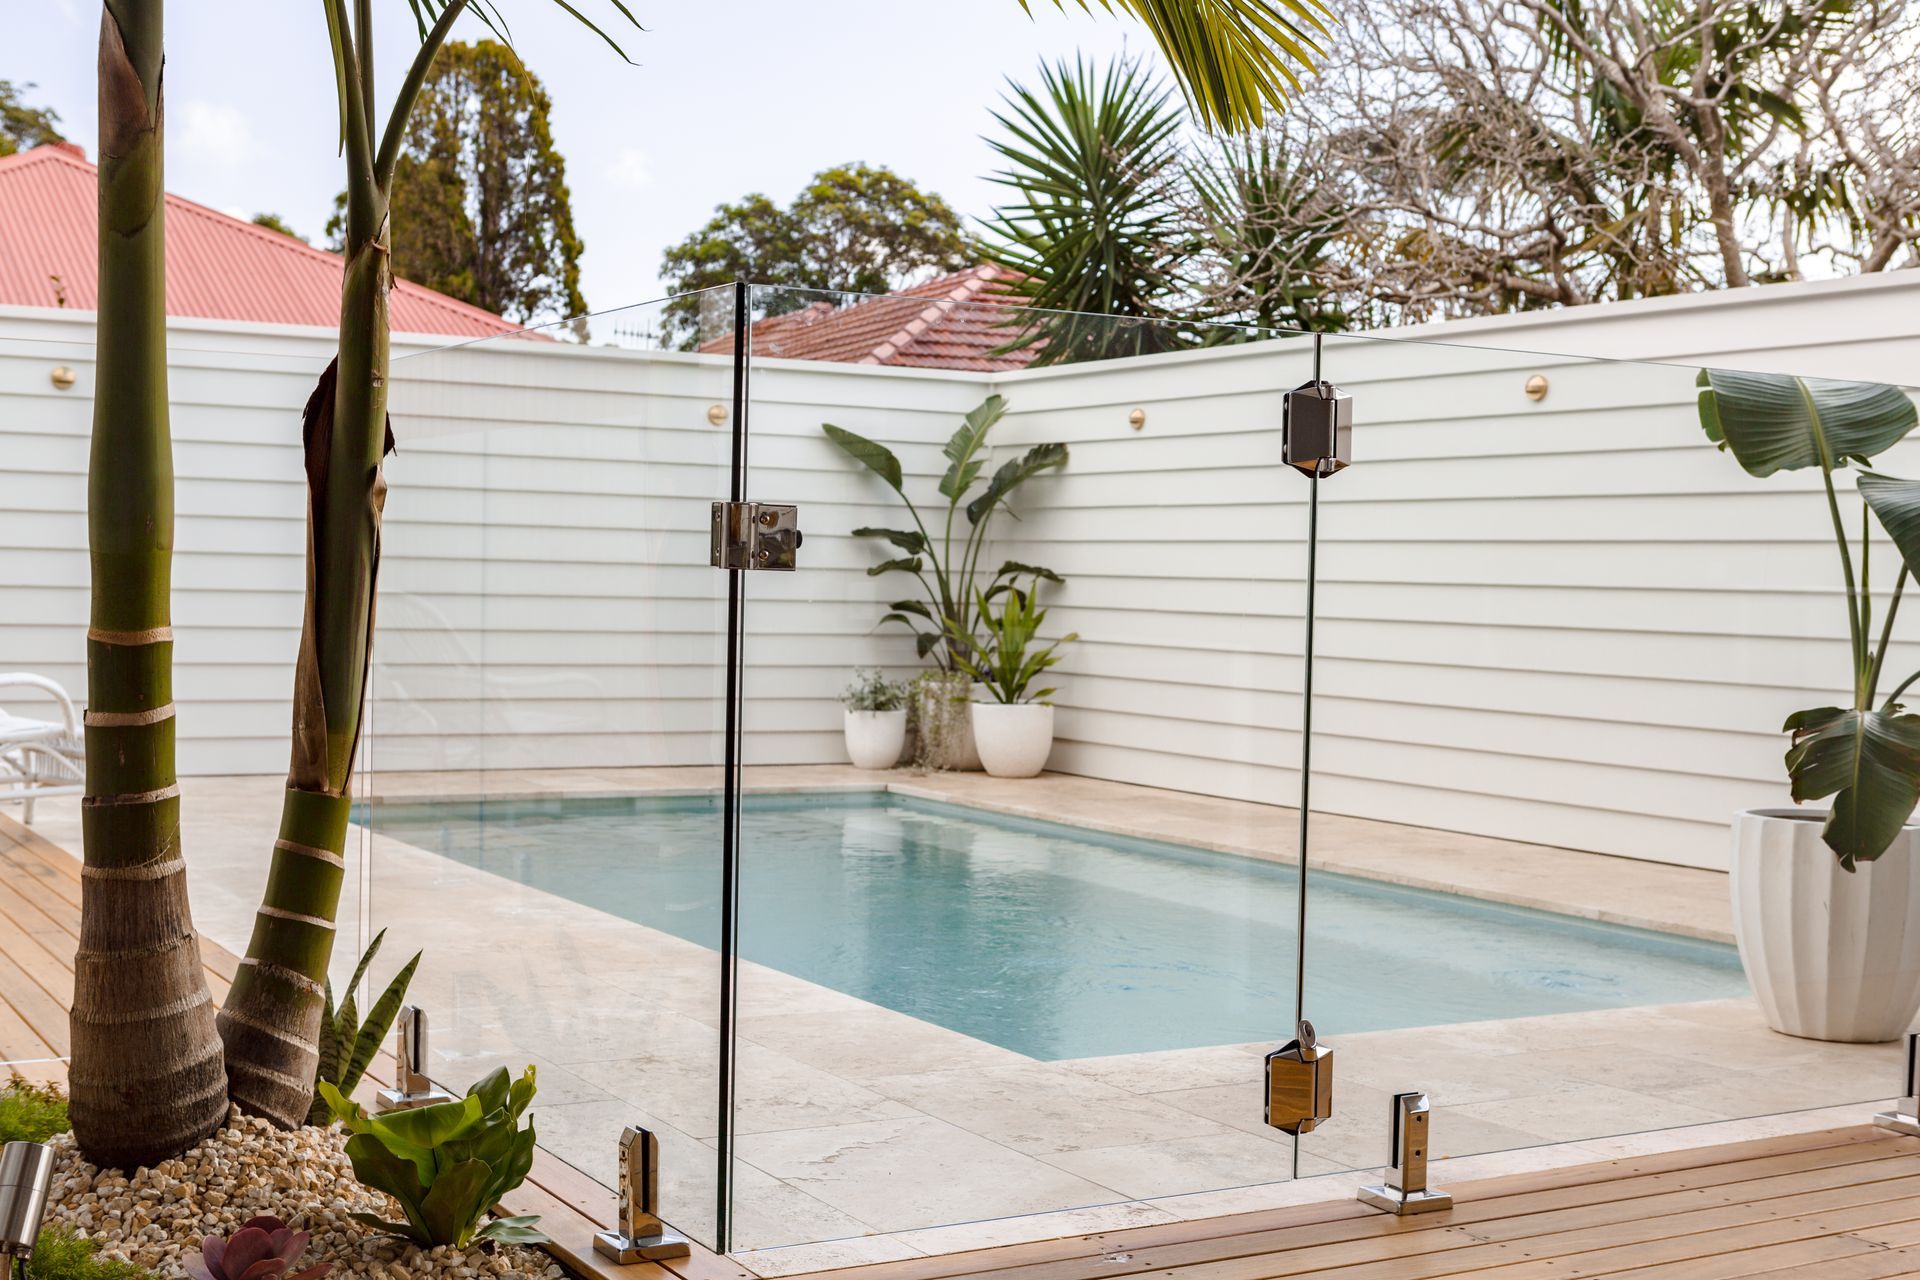 Coastline Builders & Designers swimming pool concrete resort style home